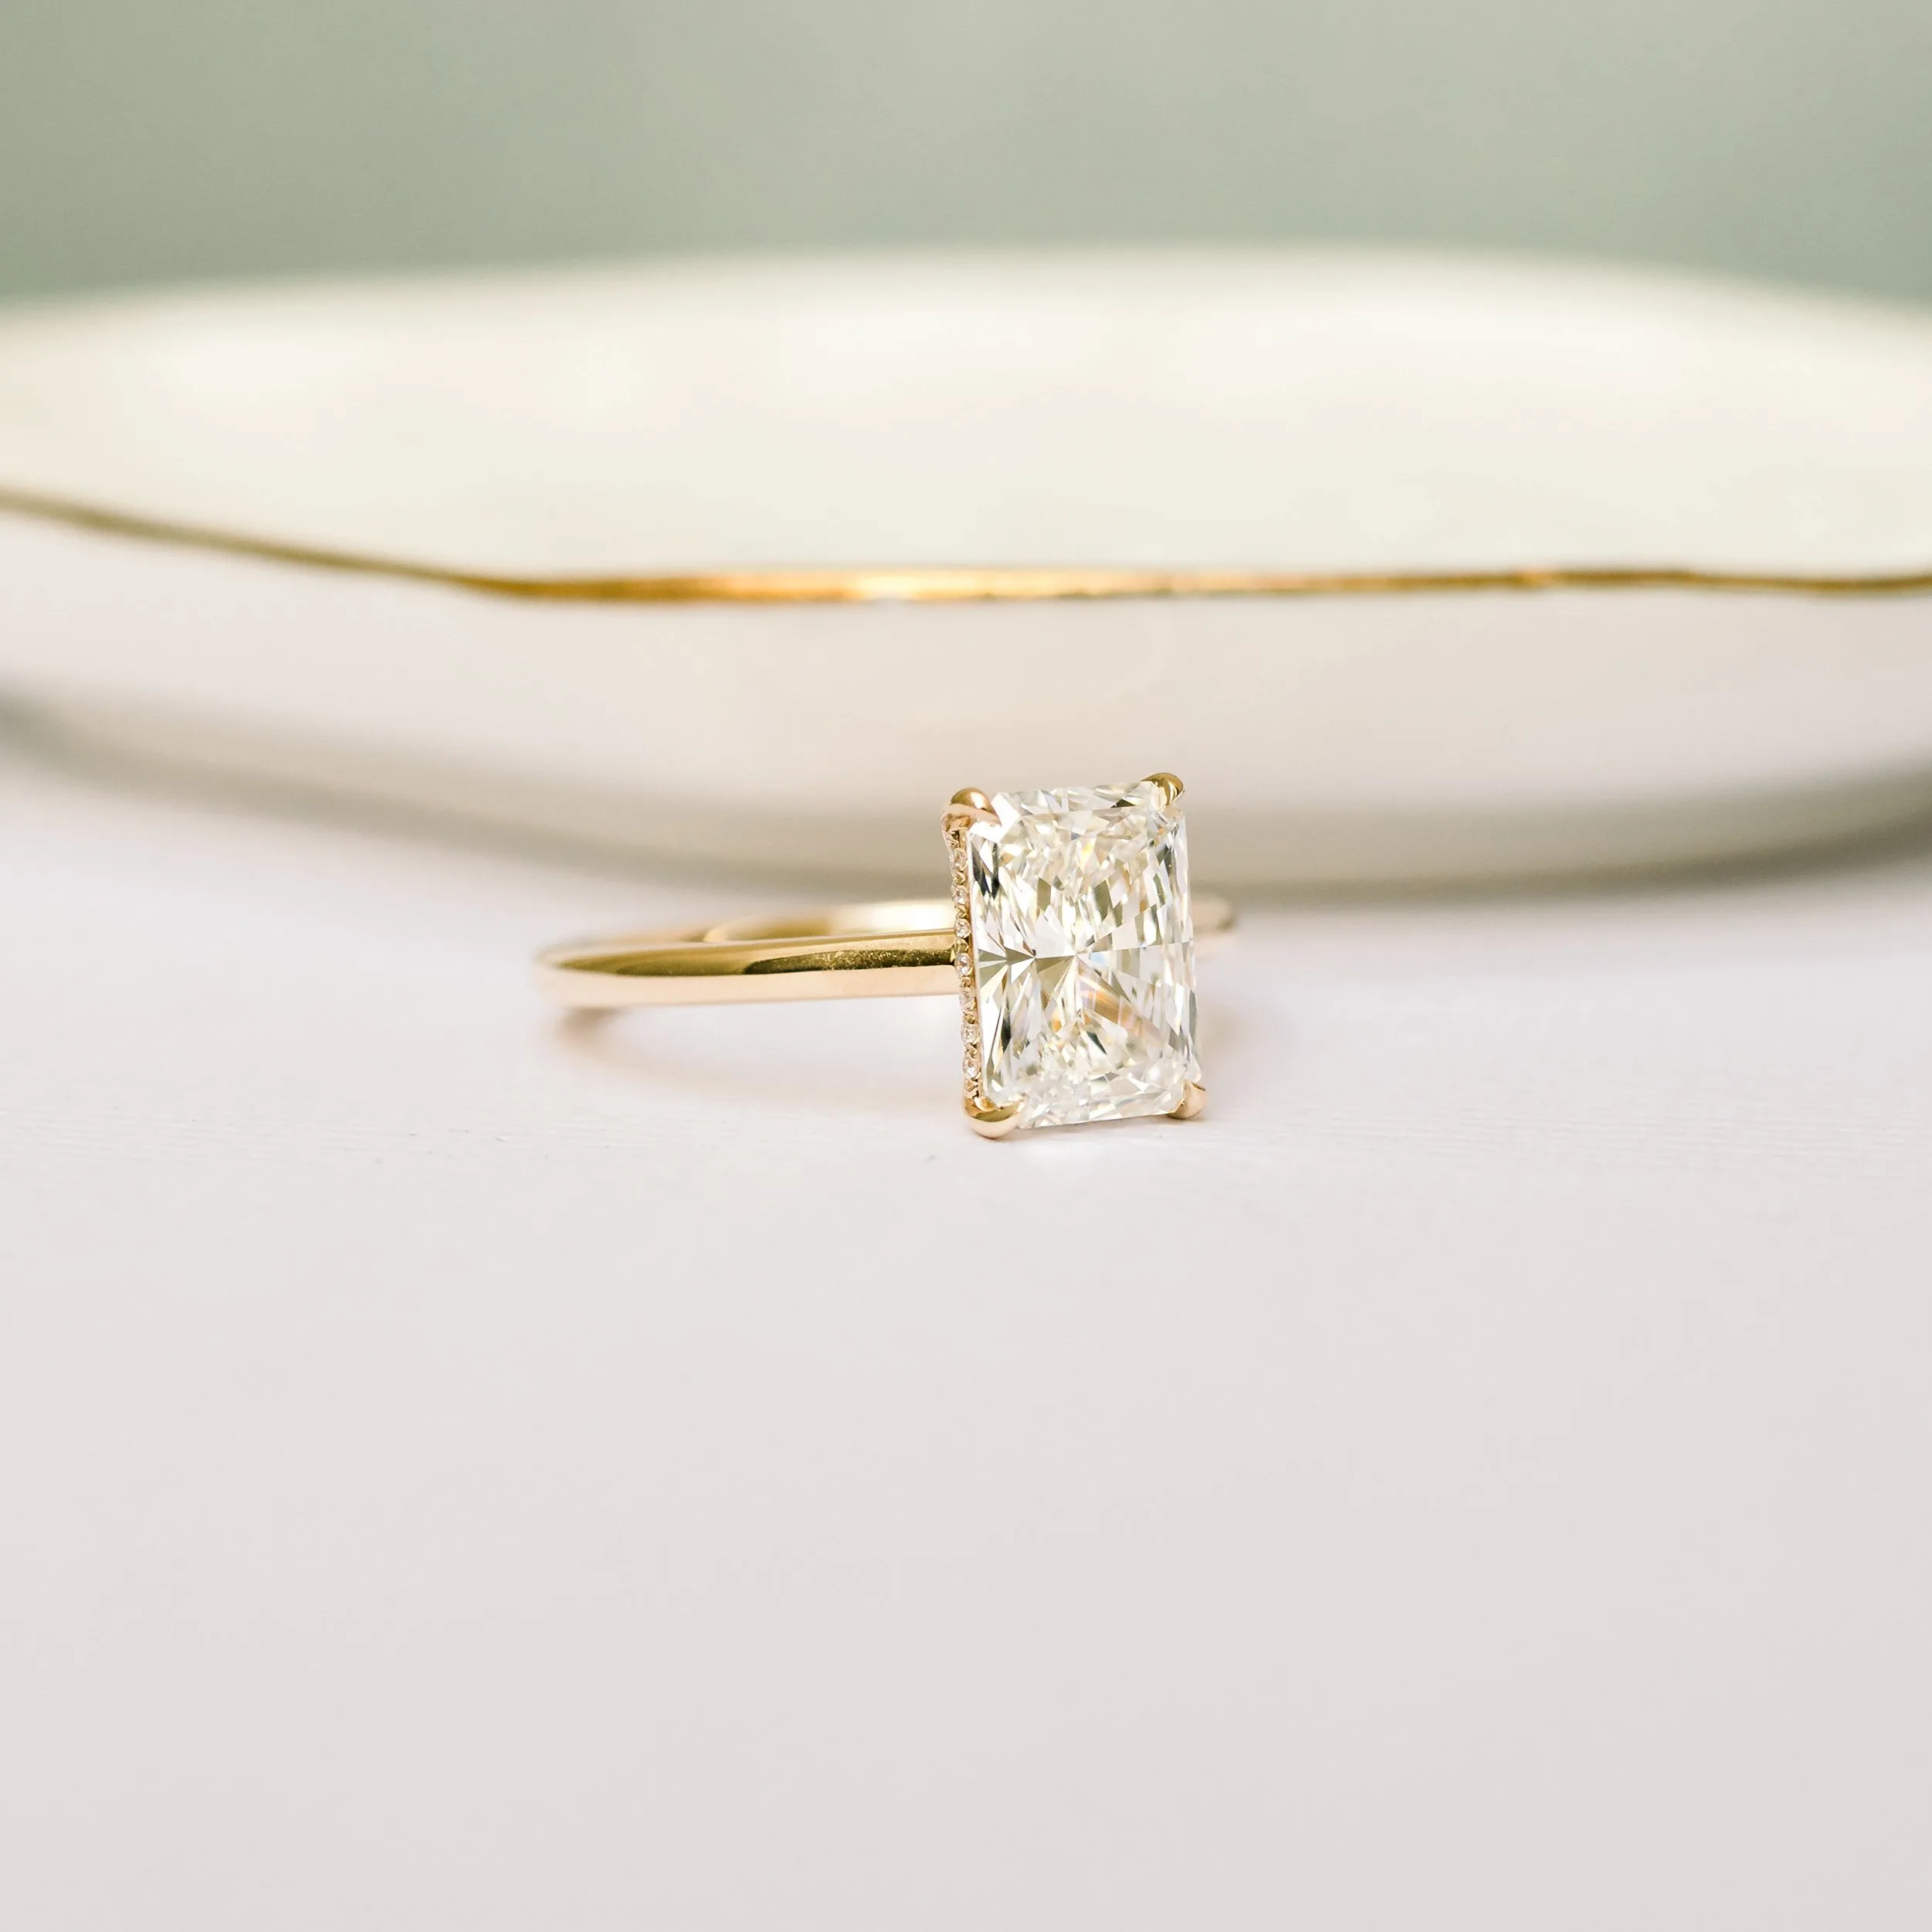 14k yellow gold 2.75ct radiant cut lab diamond solitaire engagement ring with hidden halo ada diamonds design ad 331 macro